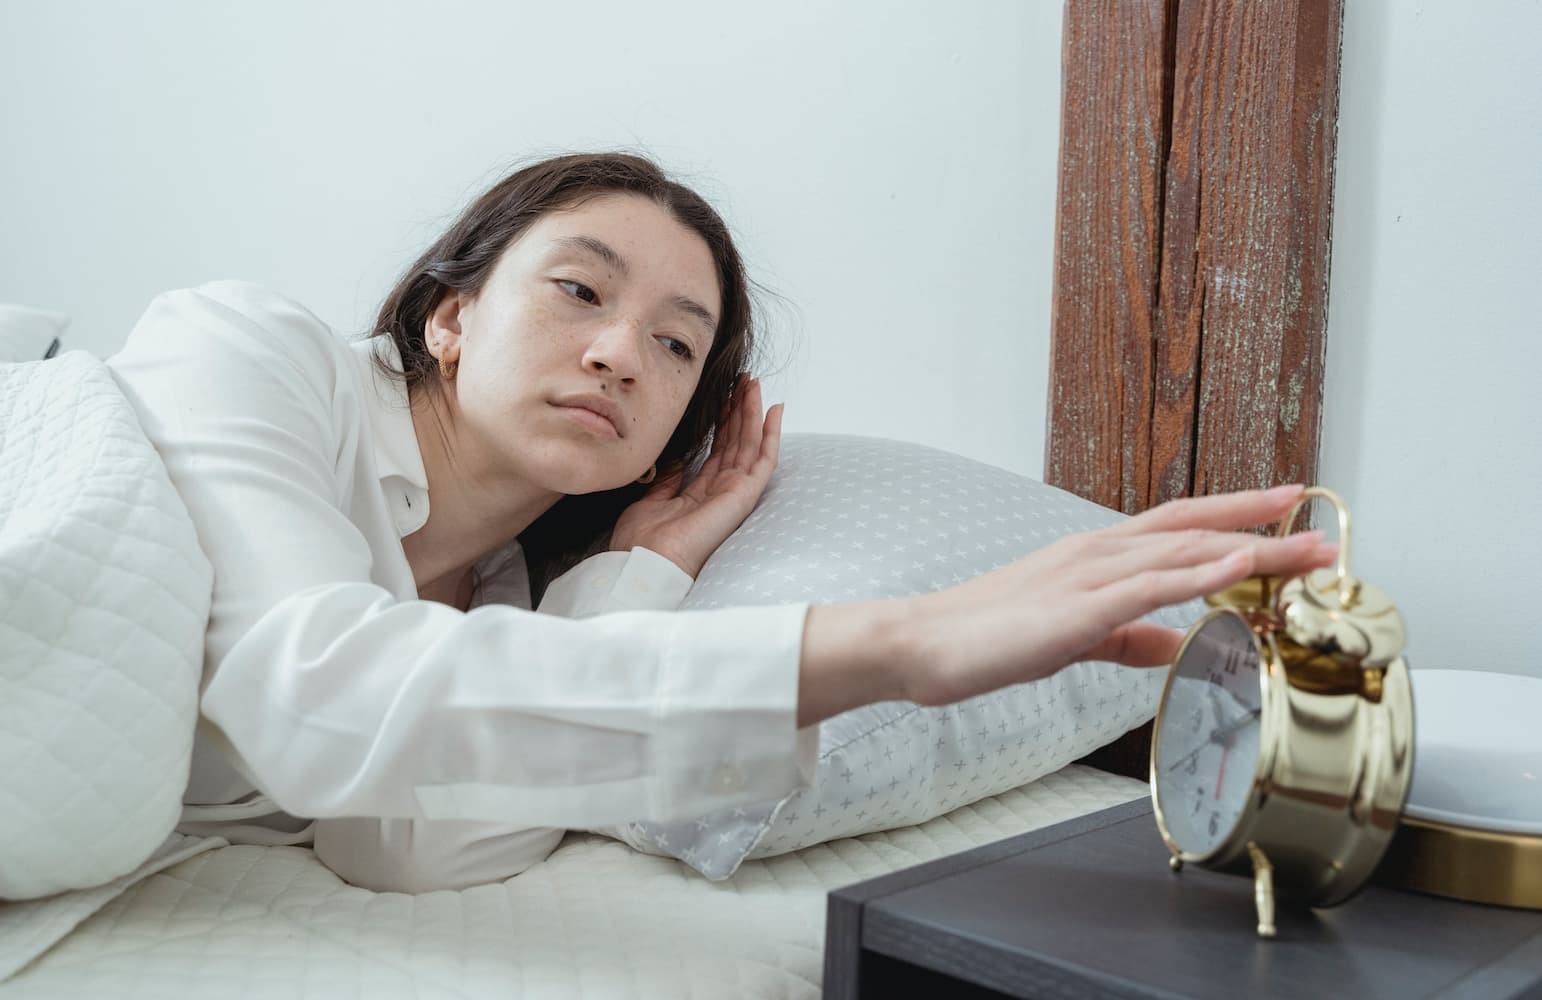 Study: Poor Sleep Habits May Lead to Obesity